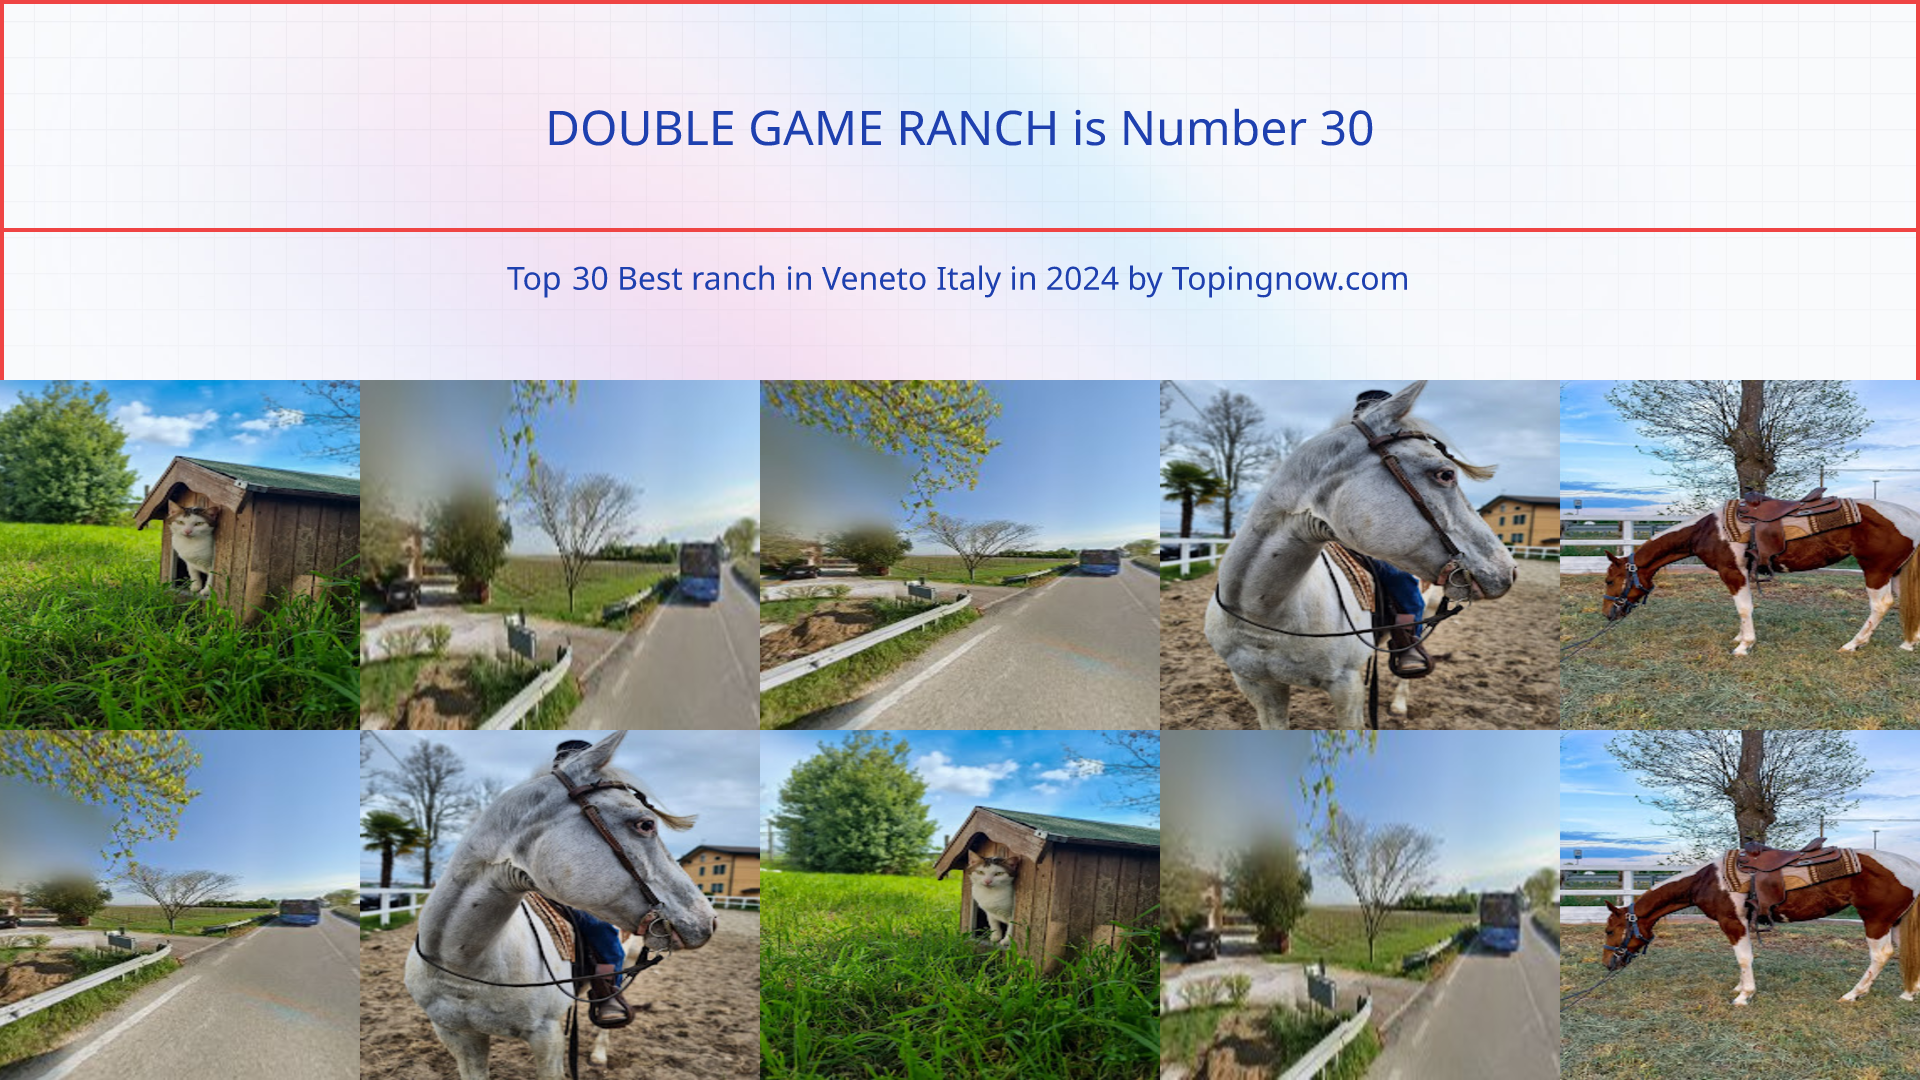 DOUBLE GAME RANCH: Top 30 Best ranch in Veneto Italy in 2024